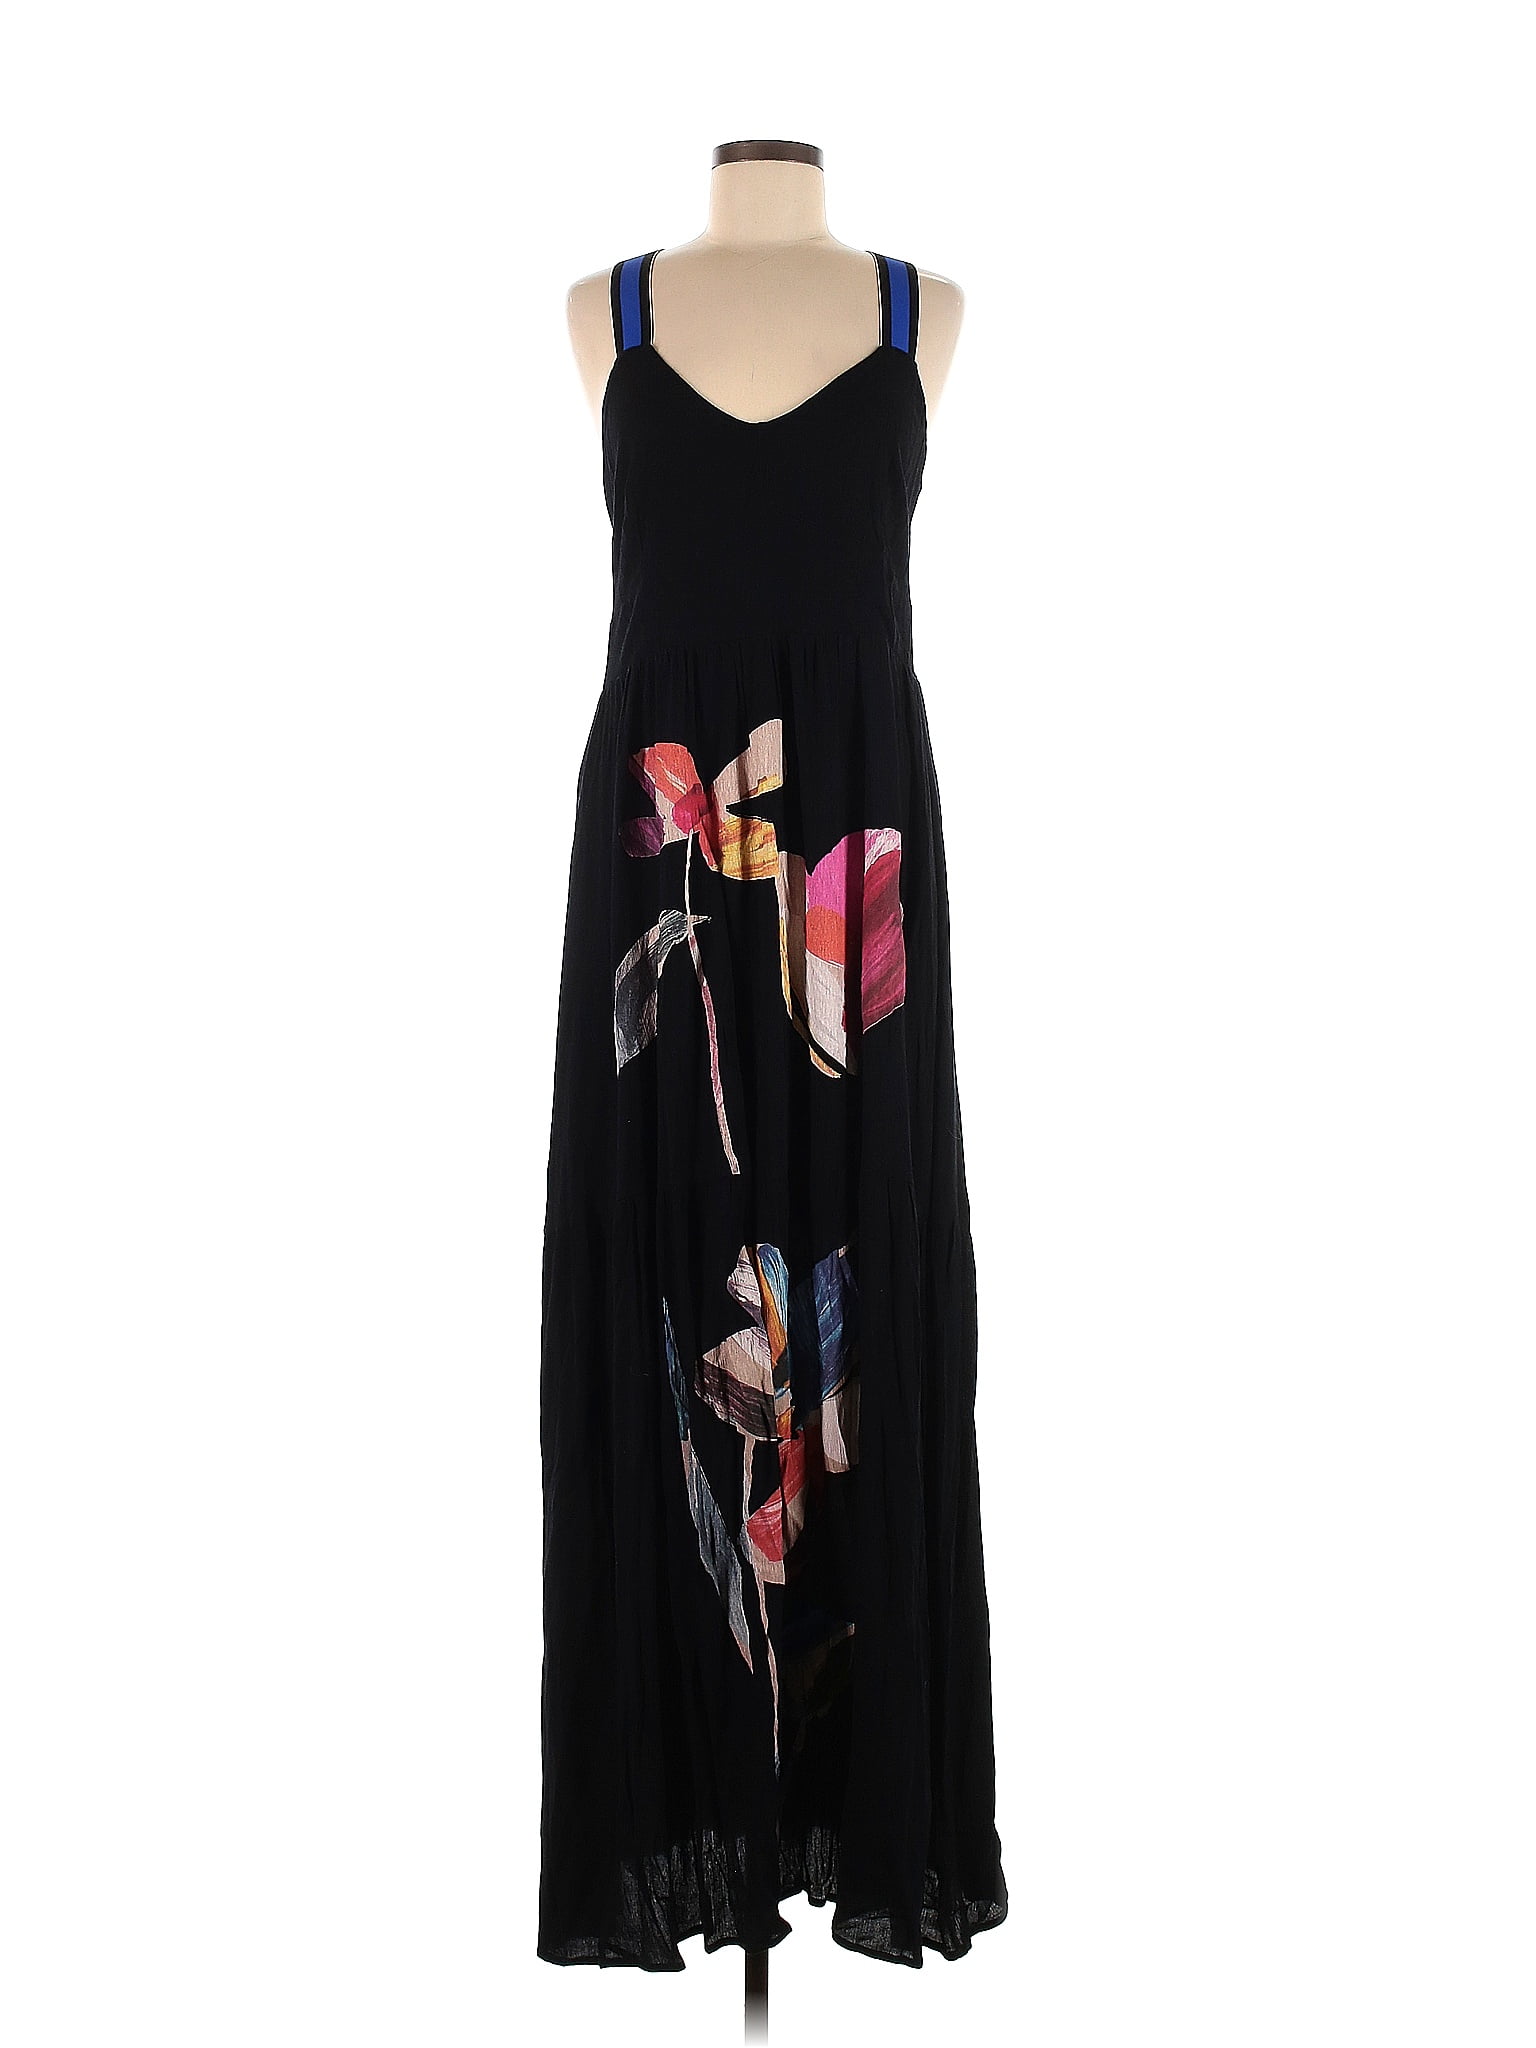 Desigual 100% Viscose Floral Black Casual Dress Size 40 (EU) - 70% off ...